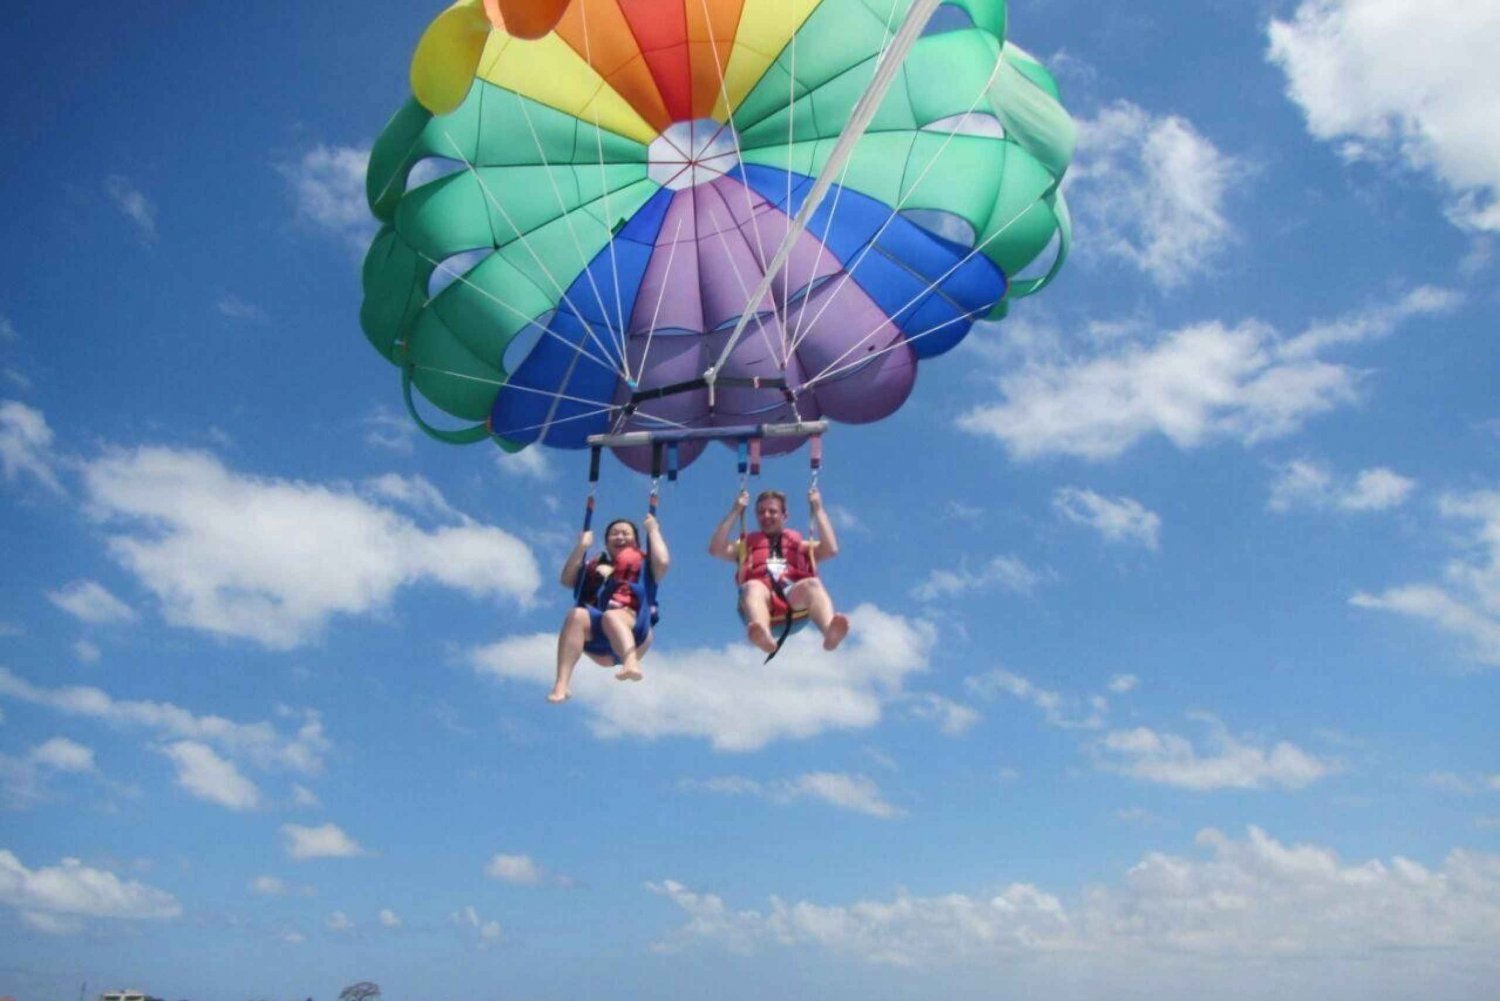 Nytt parasailingäventyr i Nusa Dua Beach Gratis upphämtning